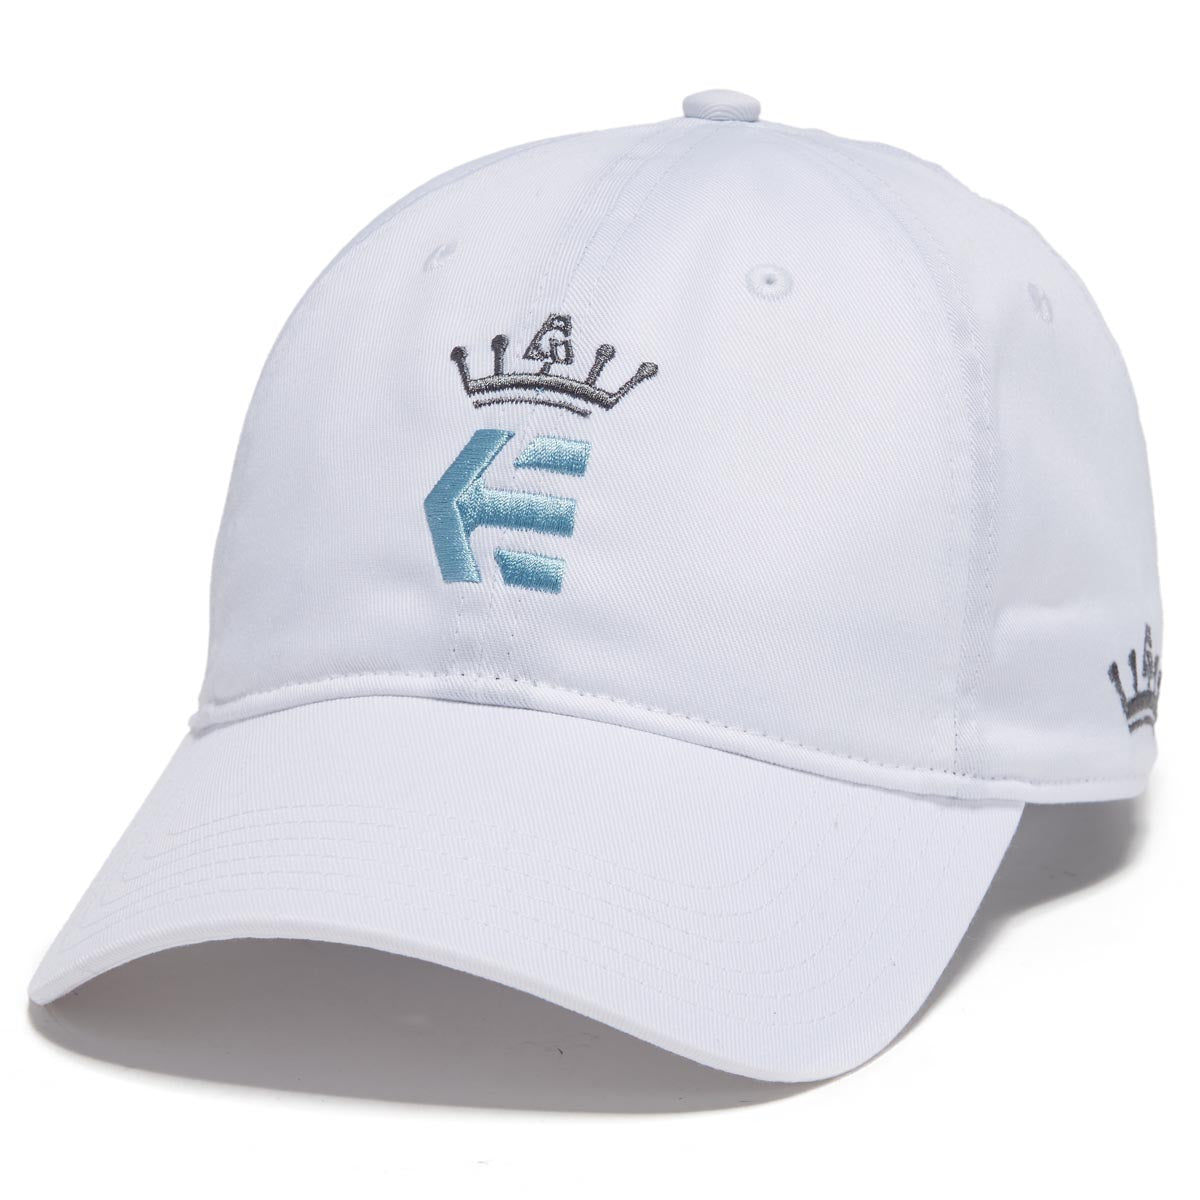 Etnies AG Snapback Hat - White/Powder image 1